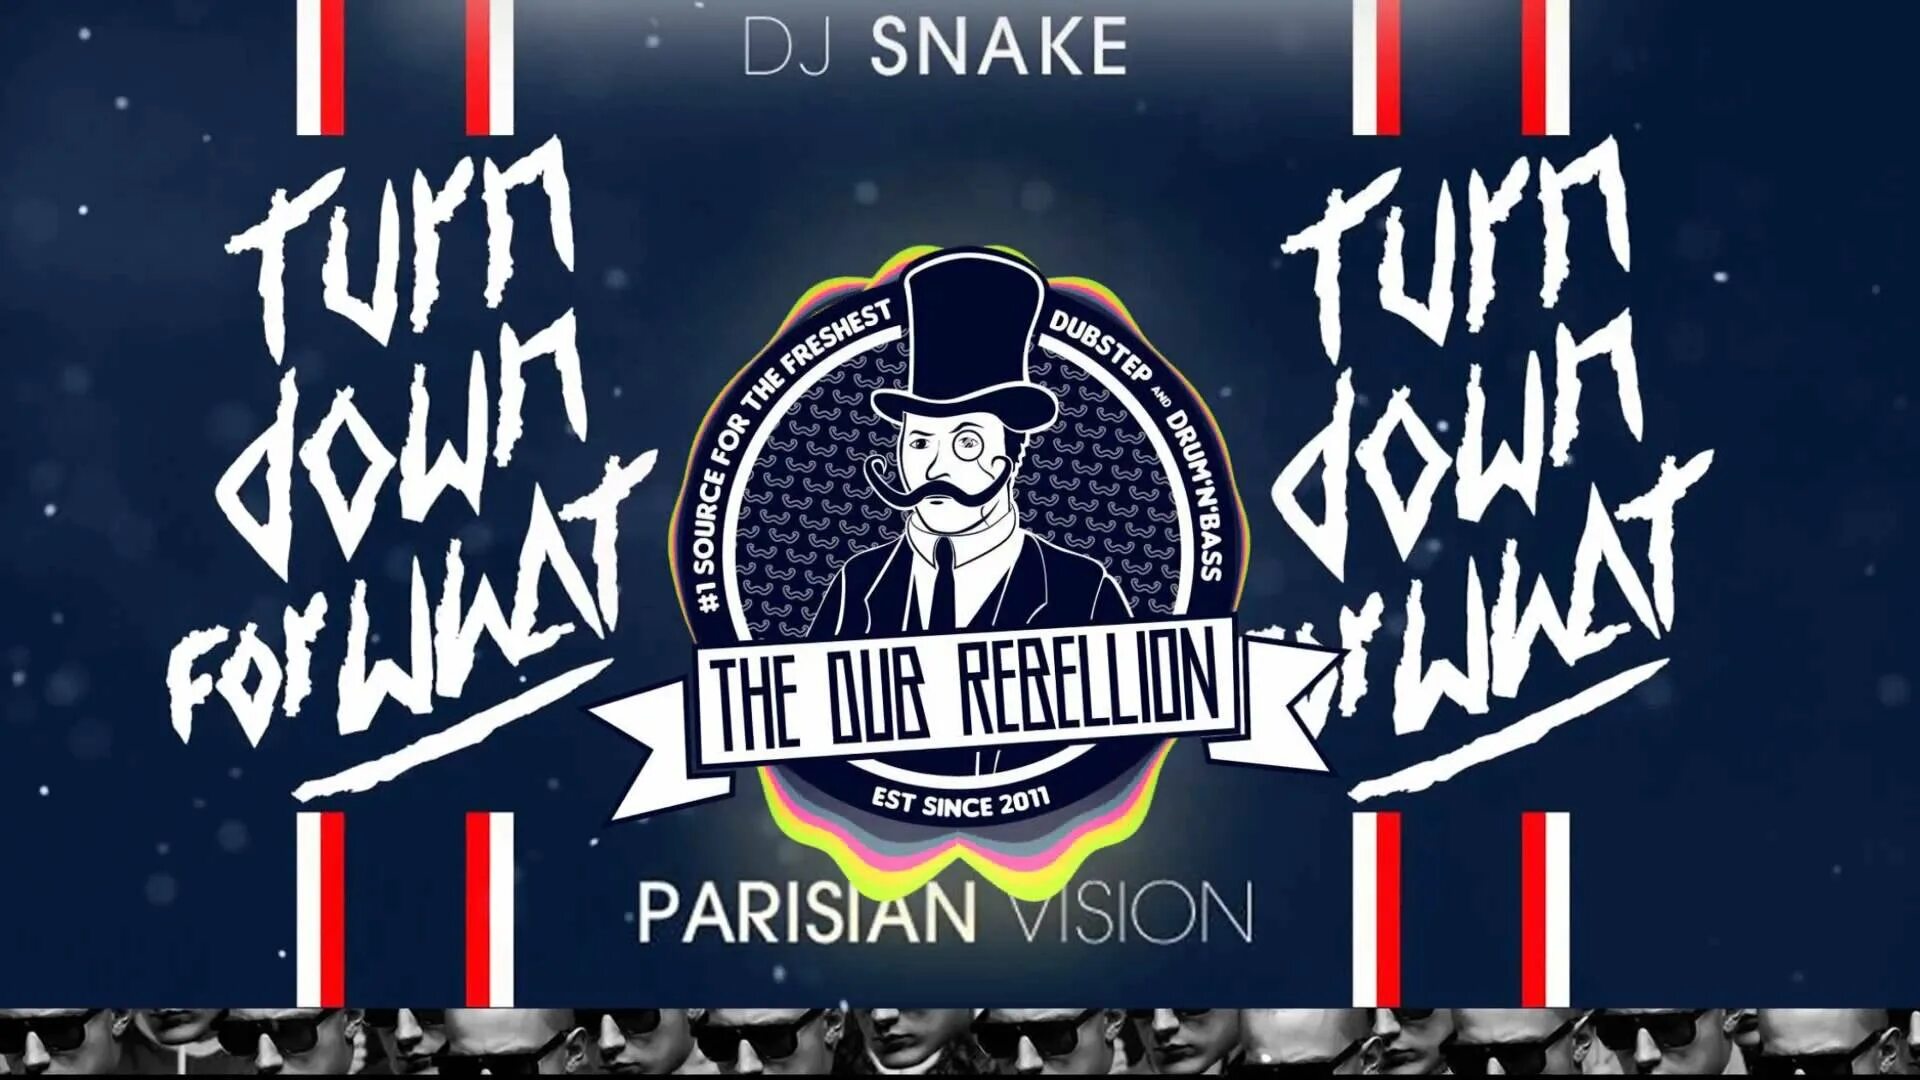 Lil jon down. DJ Snake Lil Jon. DJ Snake turn down for what. DJ Snake, Lil Jon - turn down for what. DJ Snake - turn down for what (Official Remix).